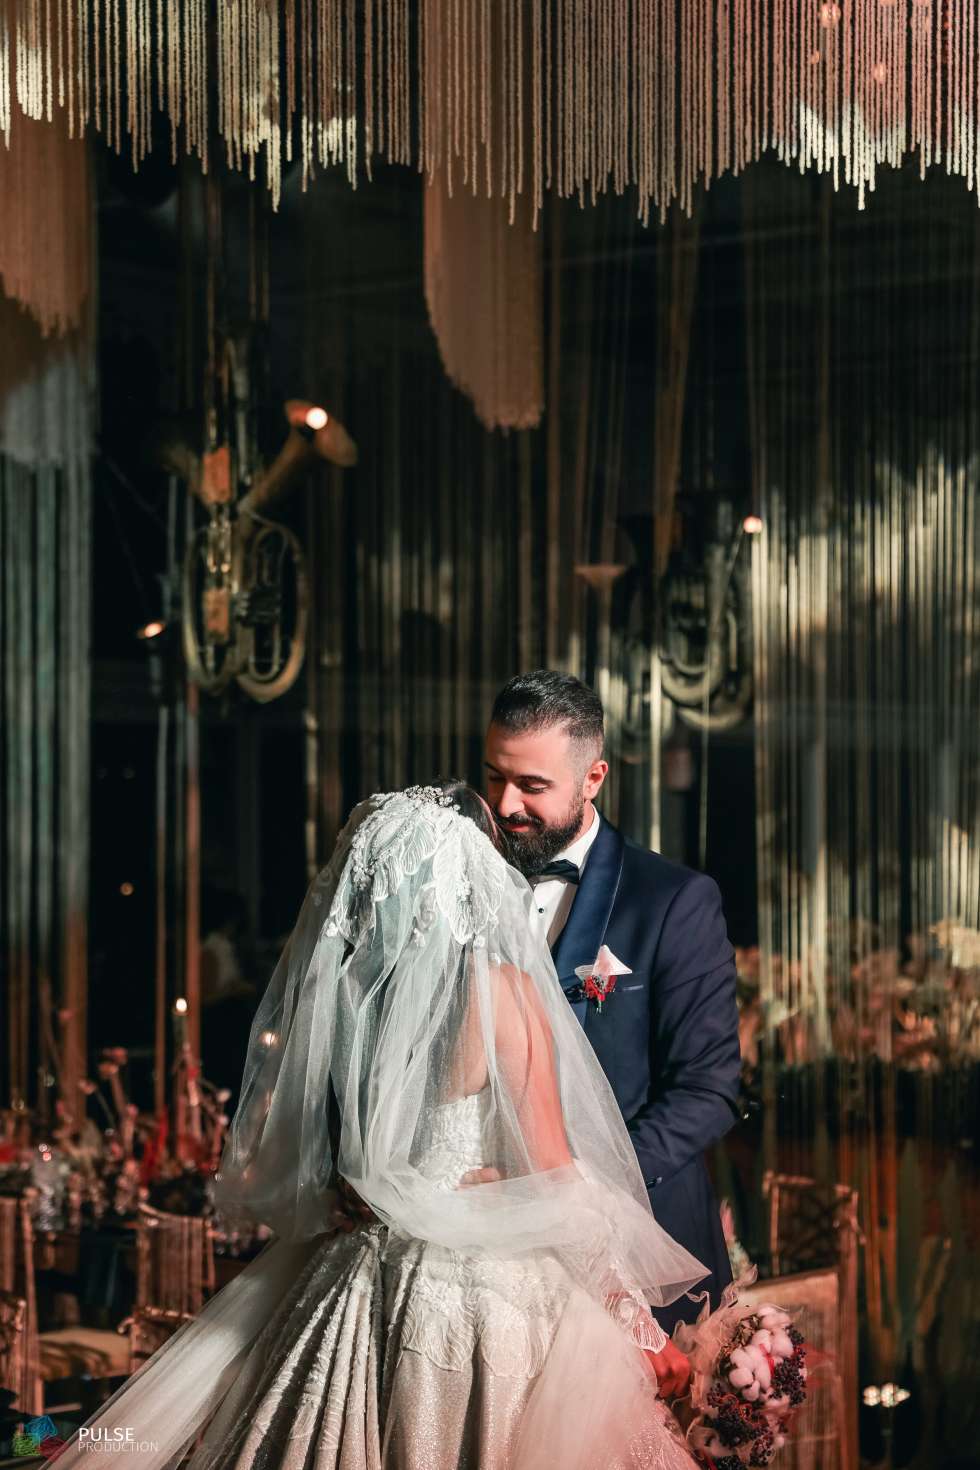 Cocoon of Love Wedding in Lebanon